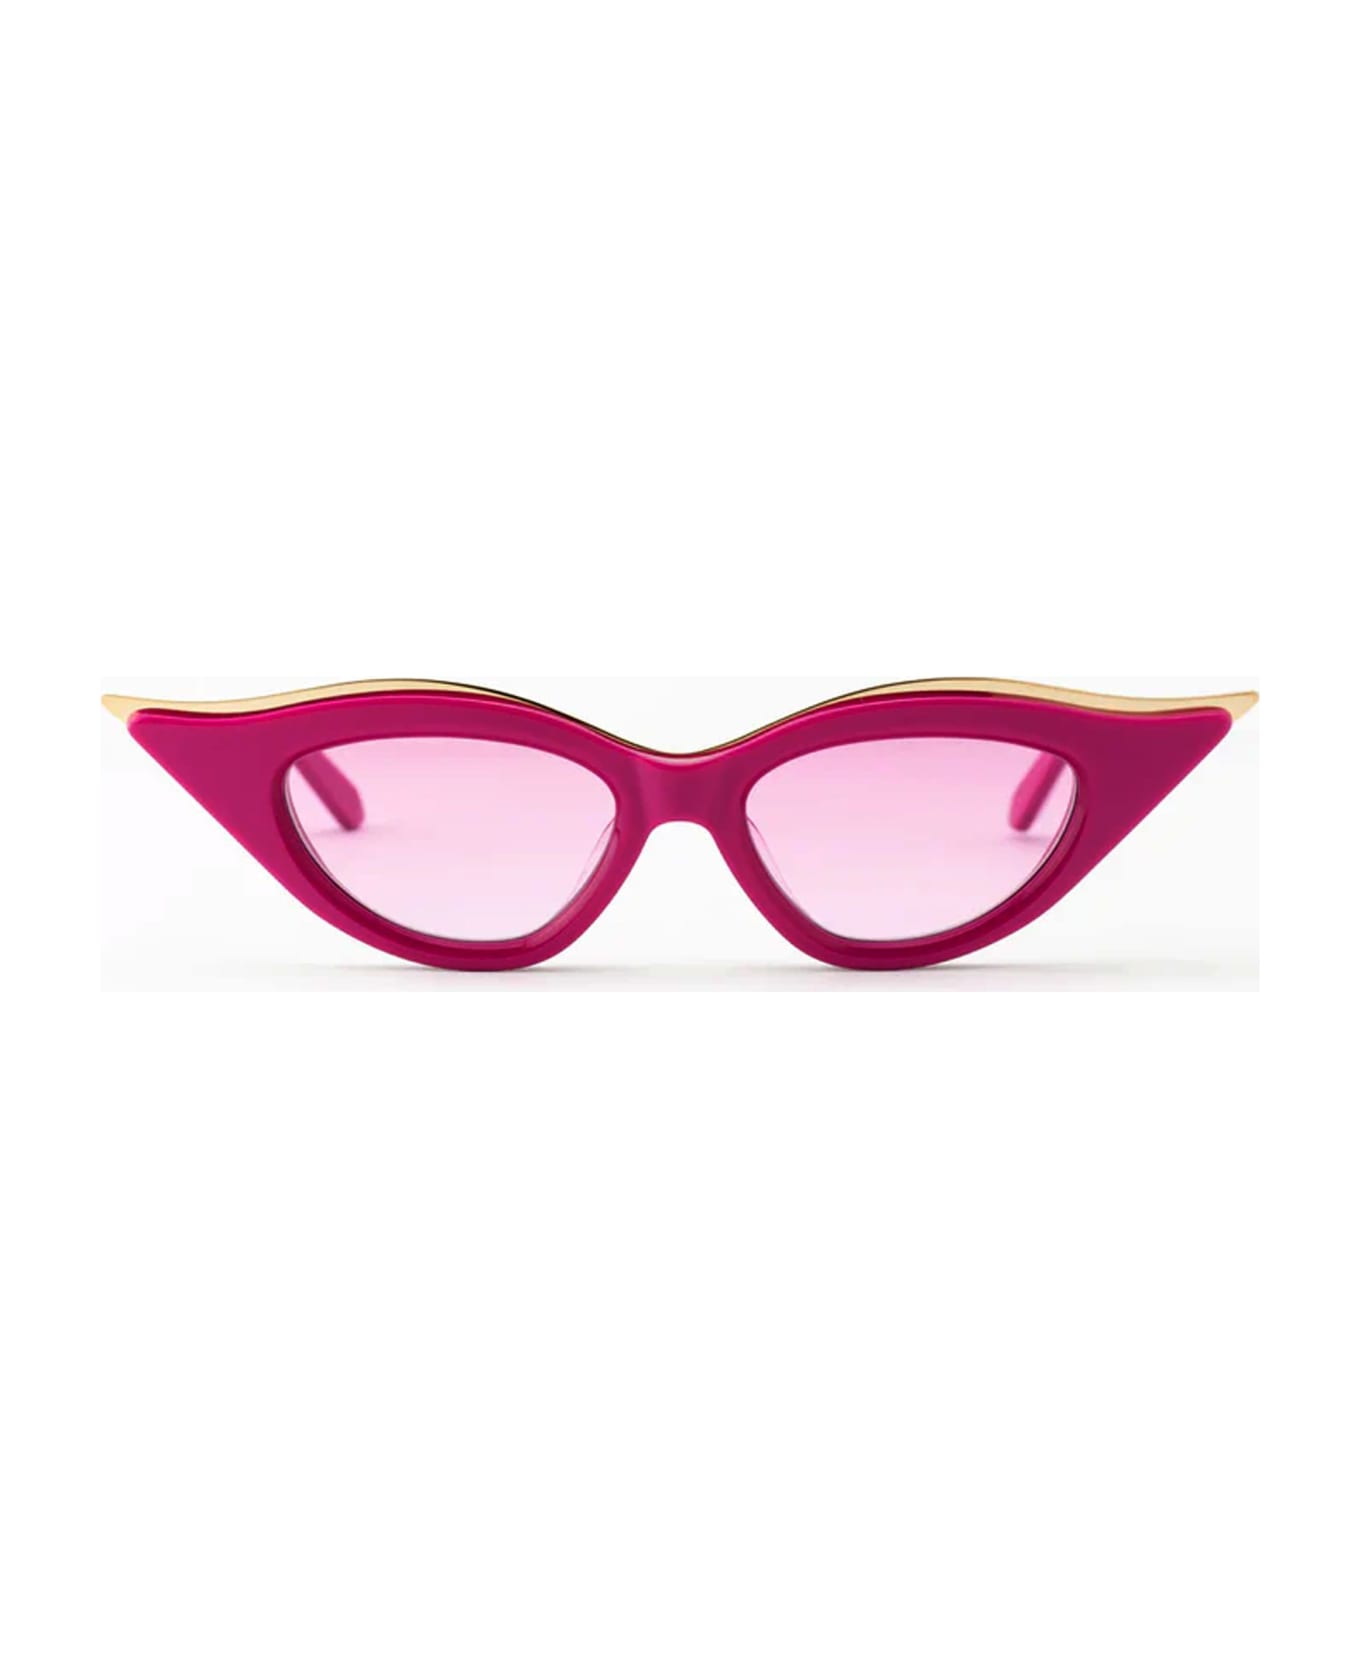 Valentino Eyewear V-goldcut Ii - Pink / White rectangular-frame Sunglasses - pink/gold